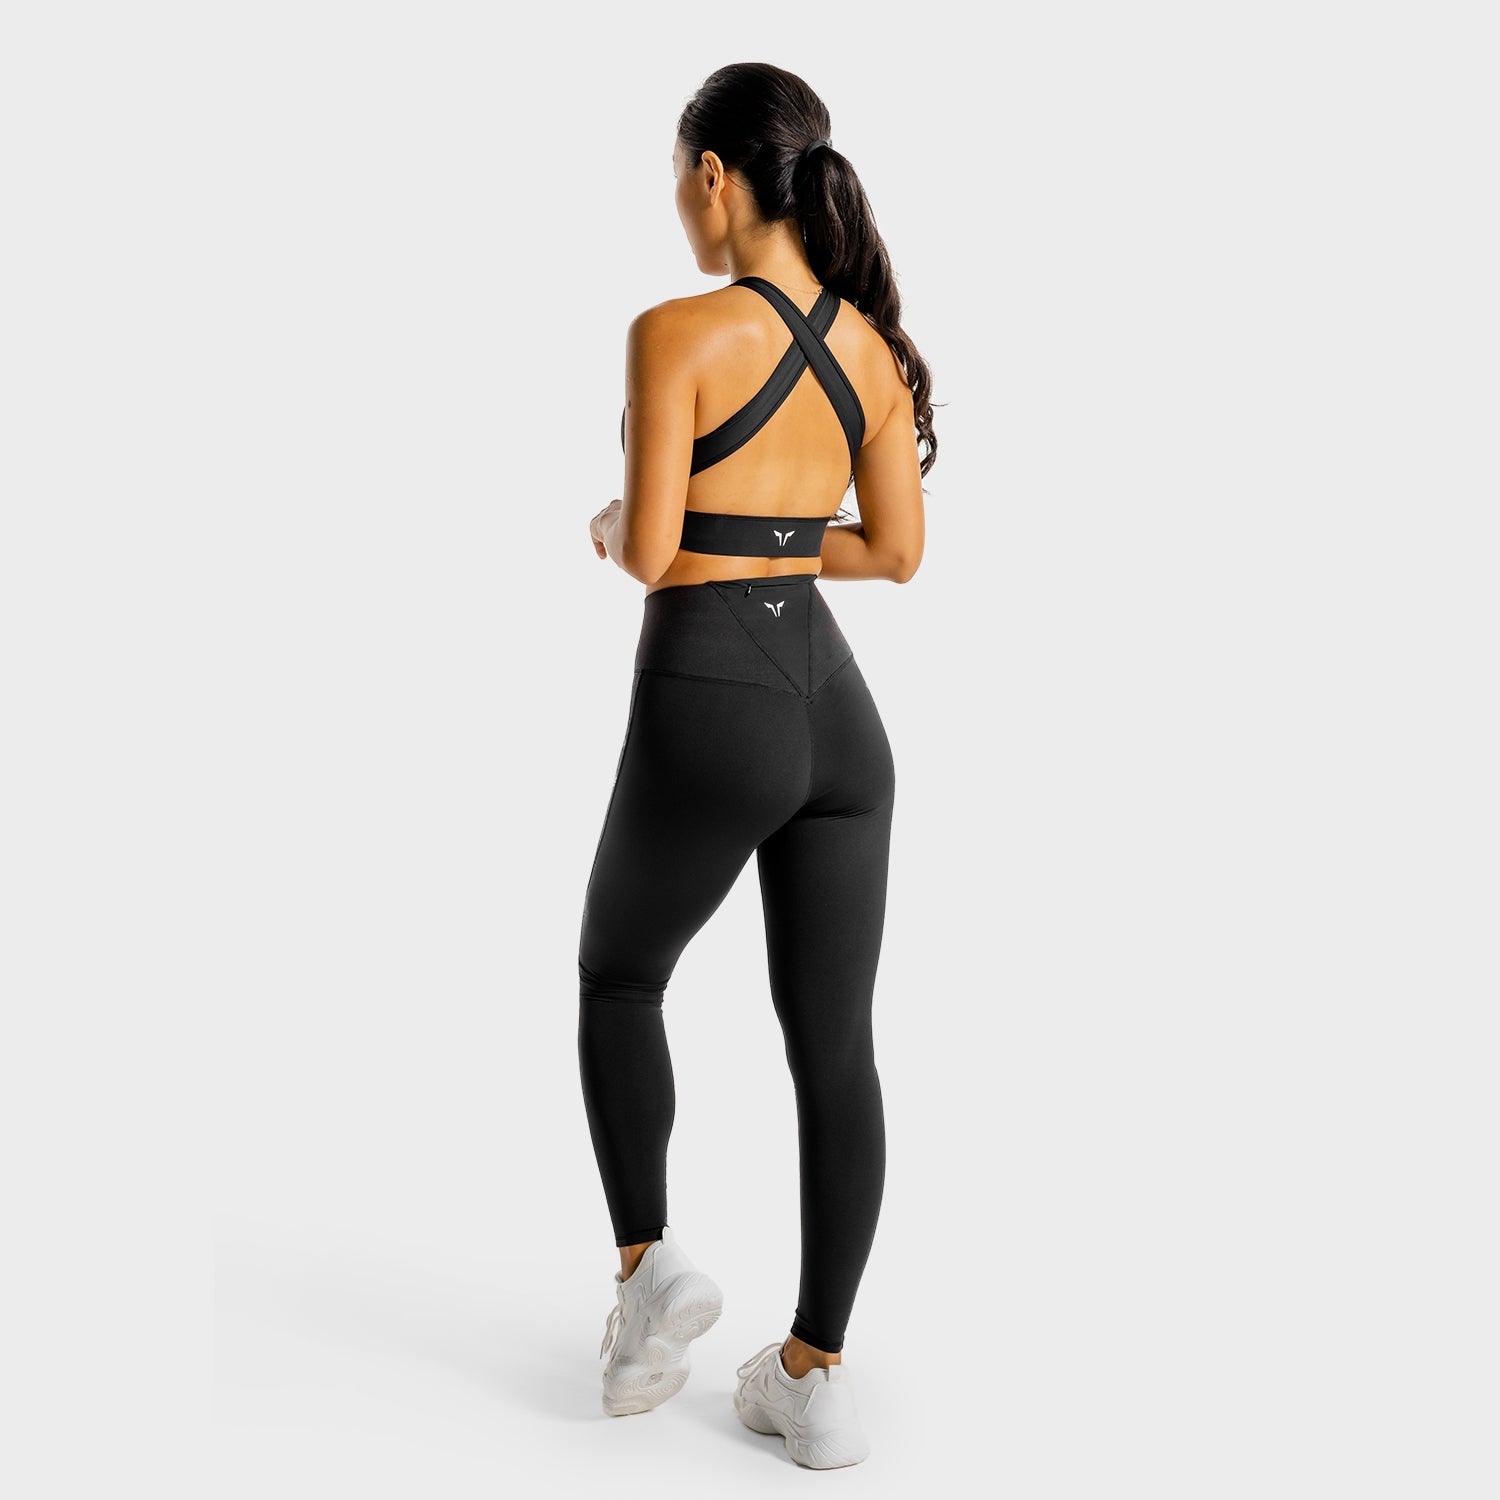 squatwolf-workout-clothes-core-leggings-black-gym-leggings-for-women